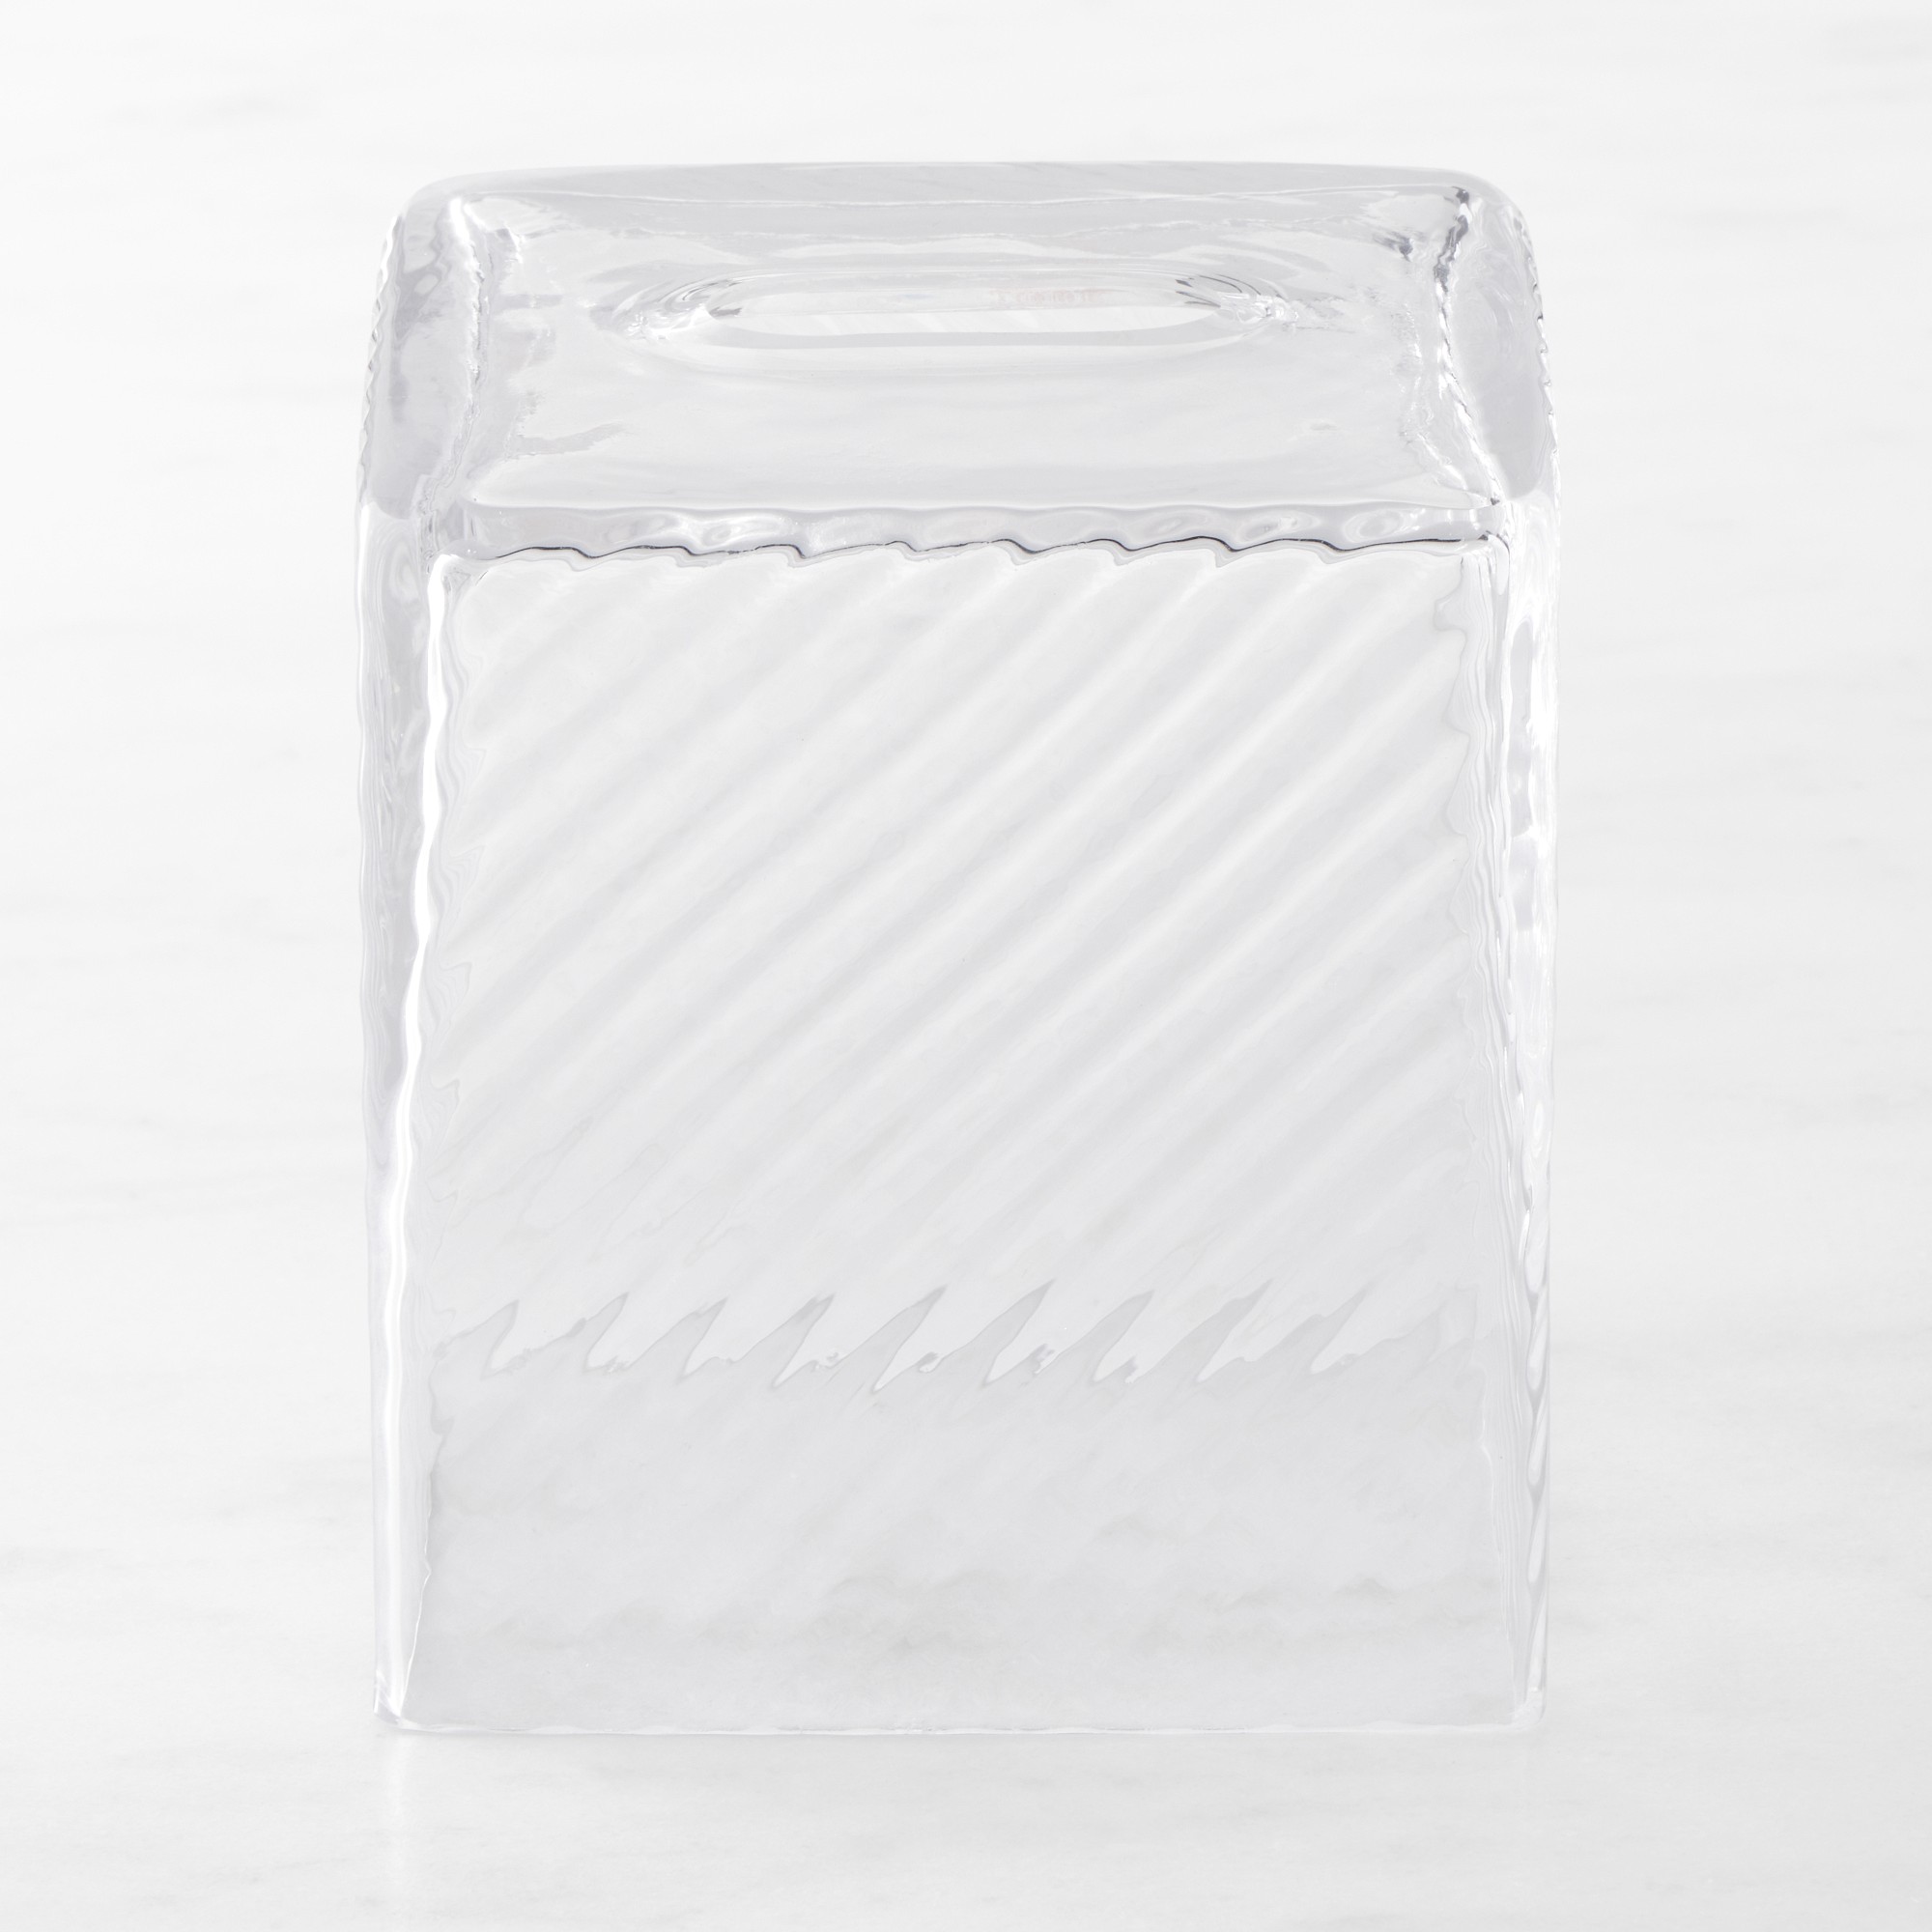 AERIN Spiral Glass Tissue Box Cover